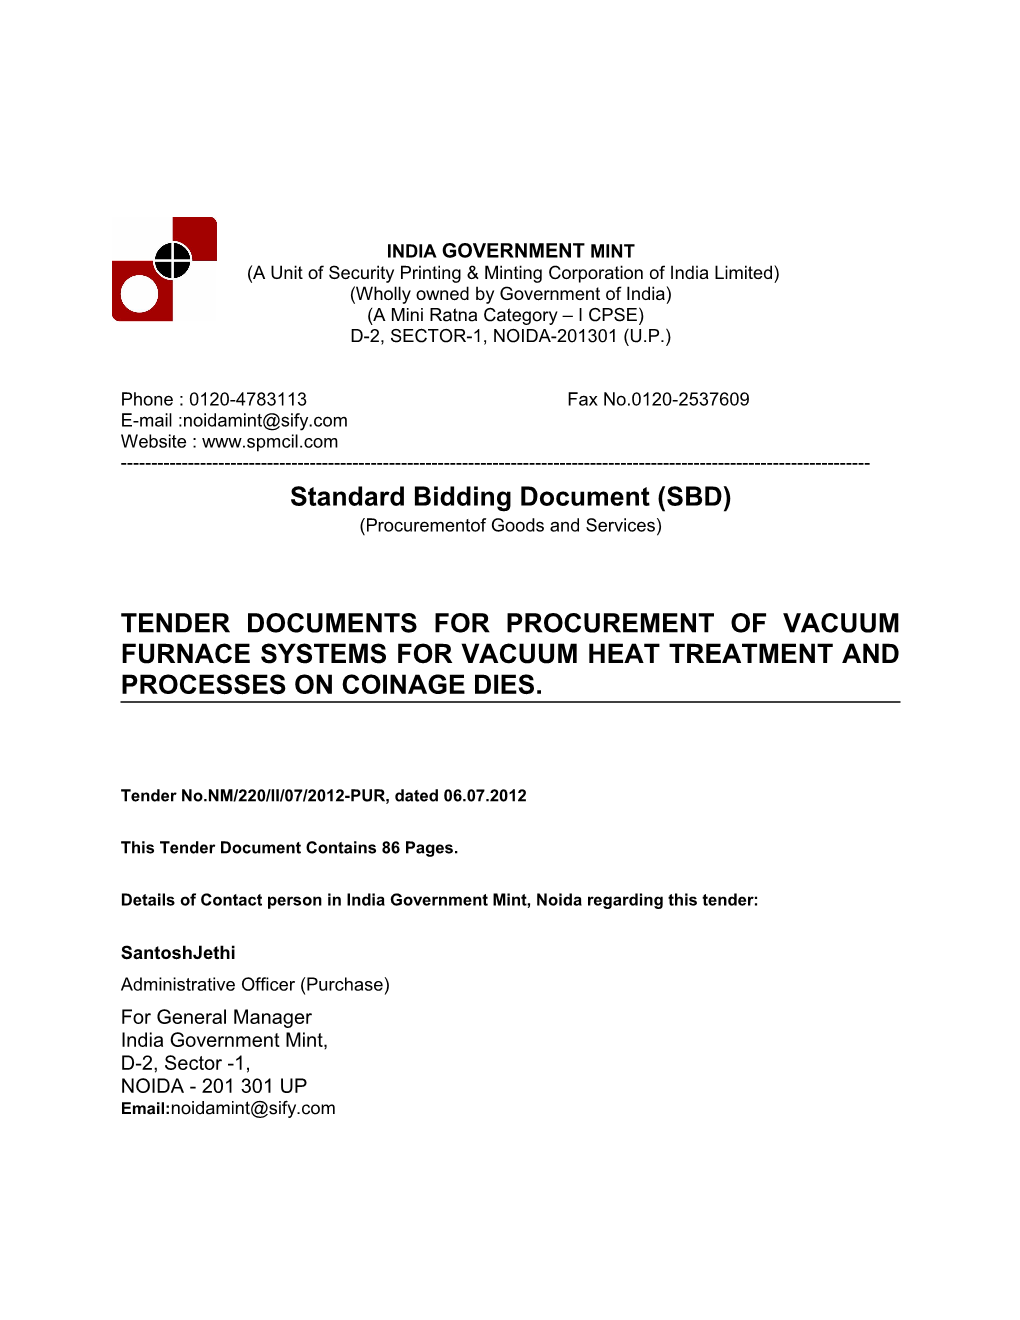 Part C: Standard Bidding Document (SBD)